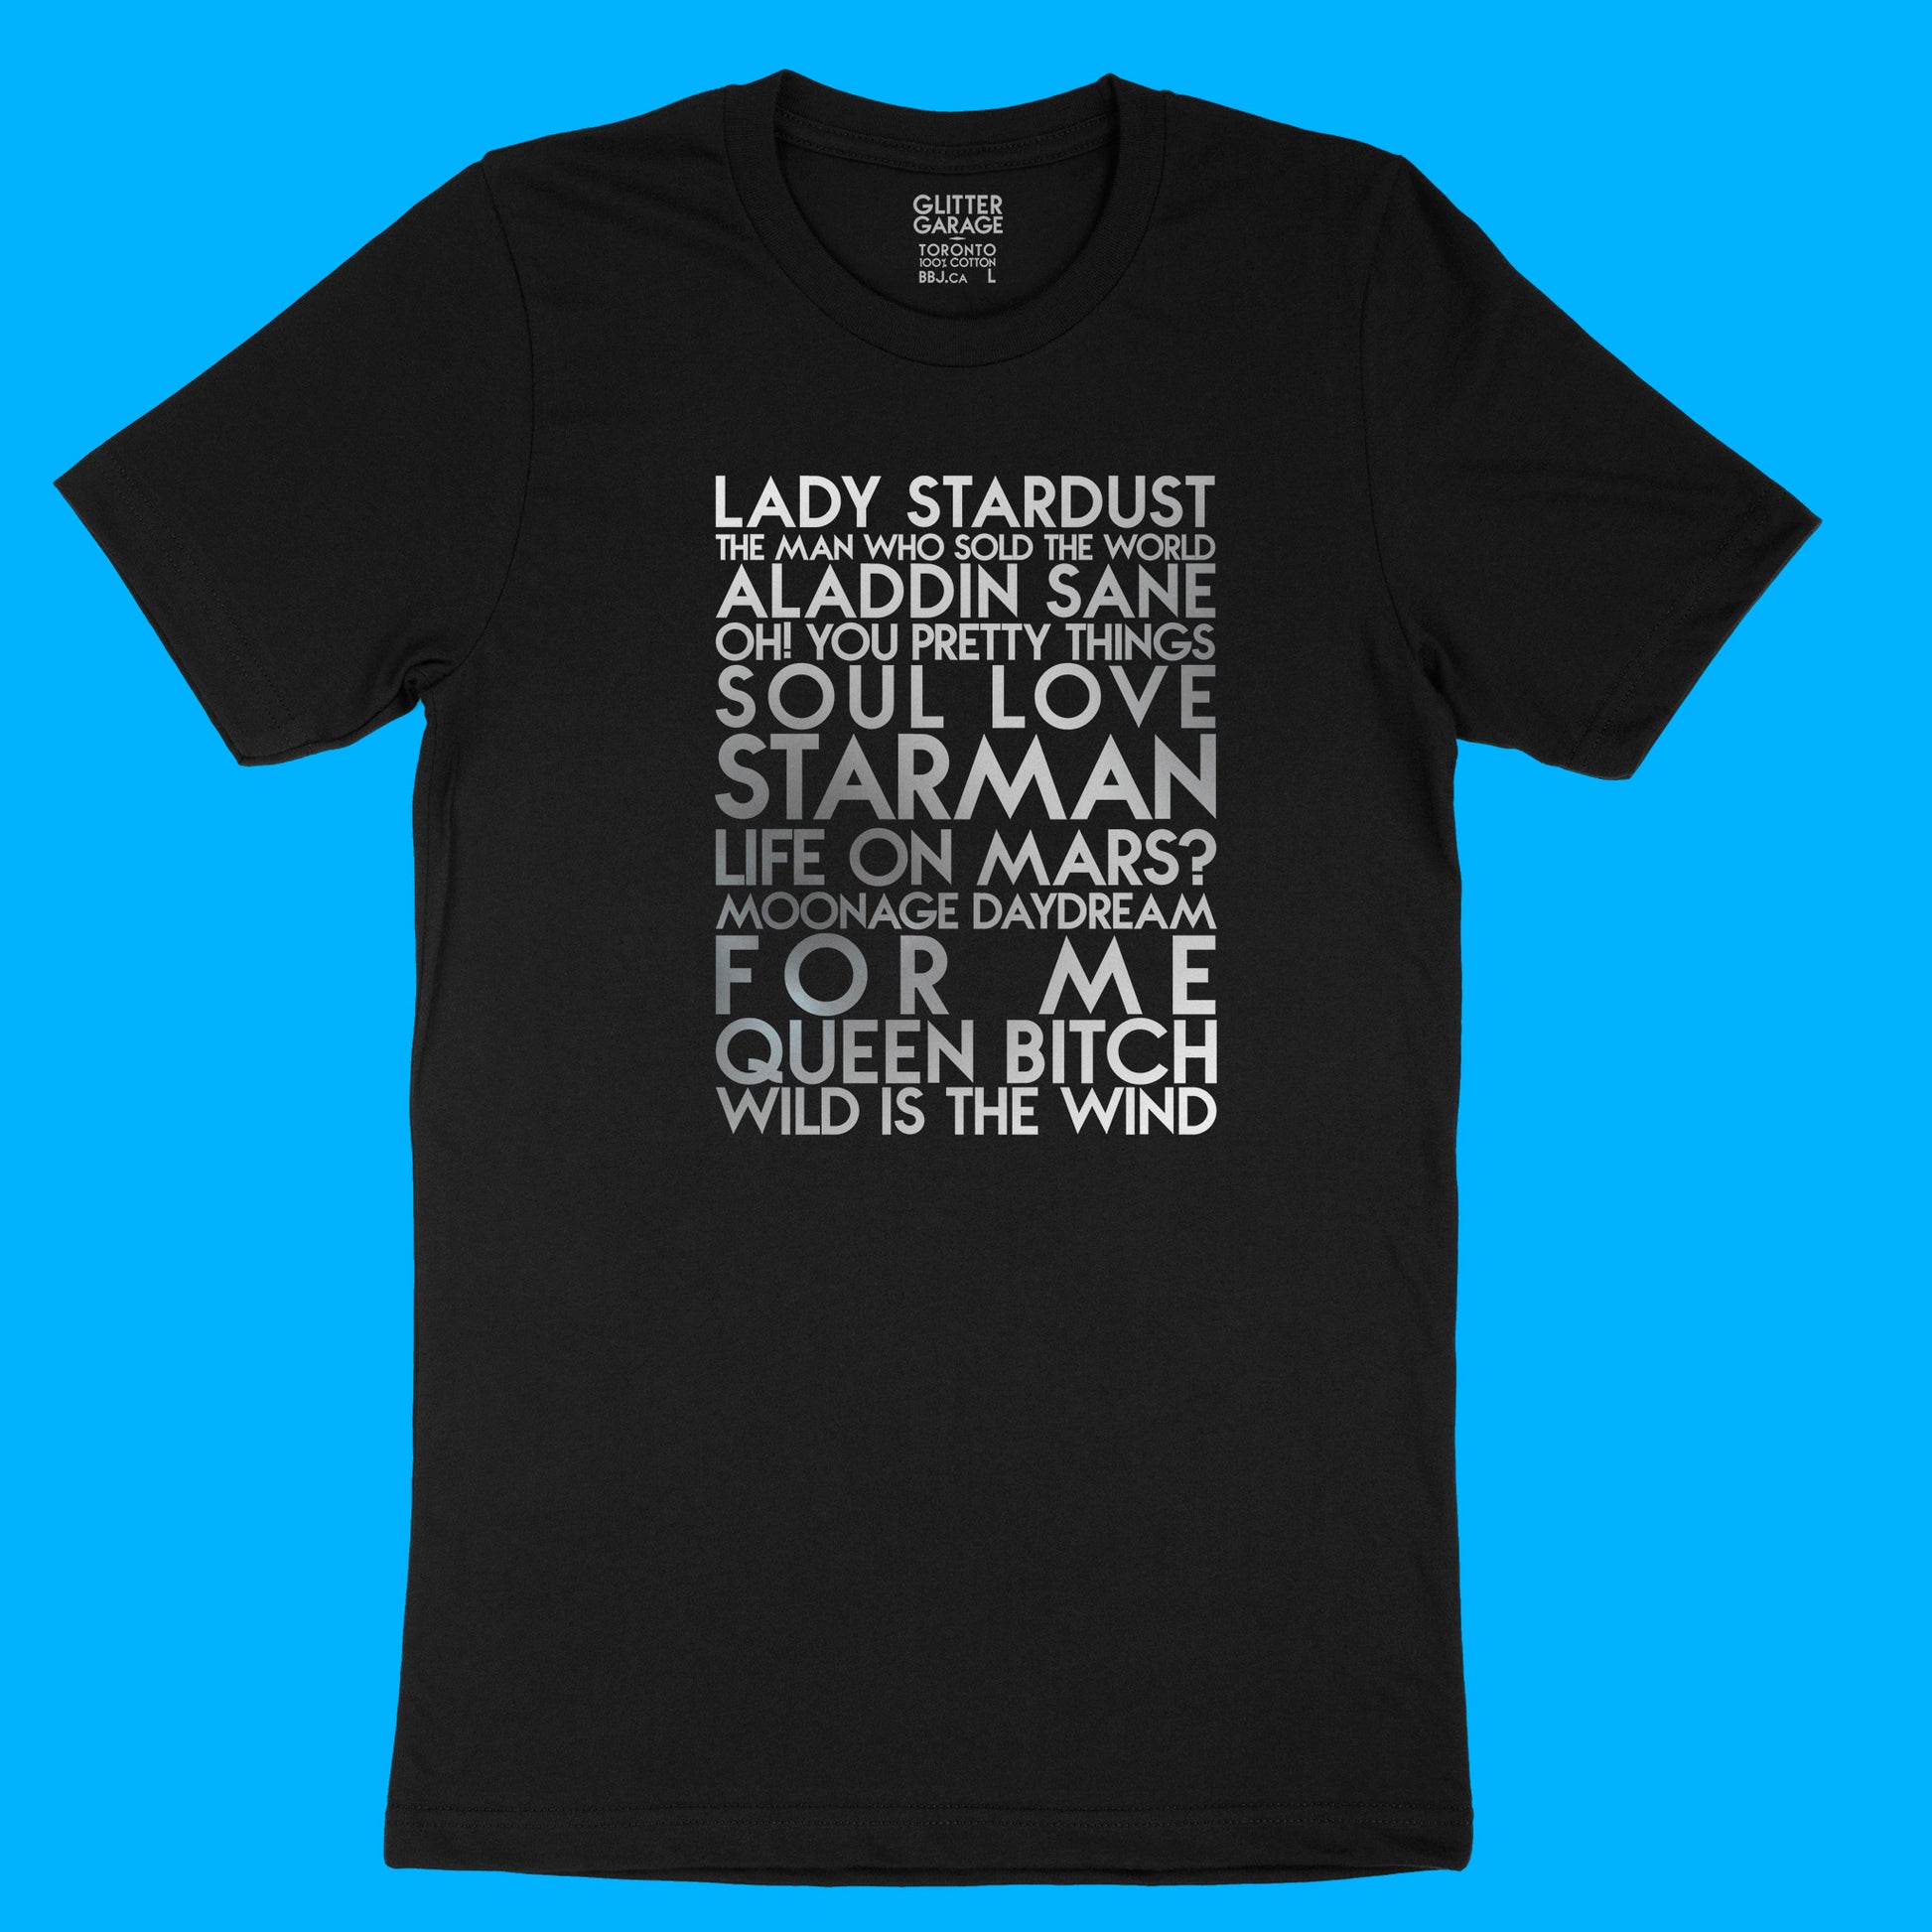 Bowie songs YourTen custom sample - silver matte text on black unisex t-shirt -  by BBJ / Glitter Garage